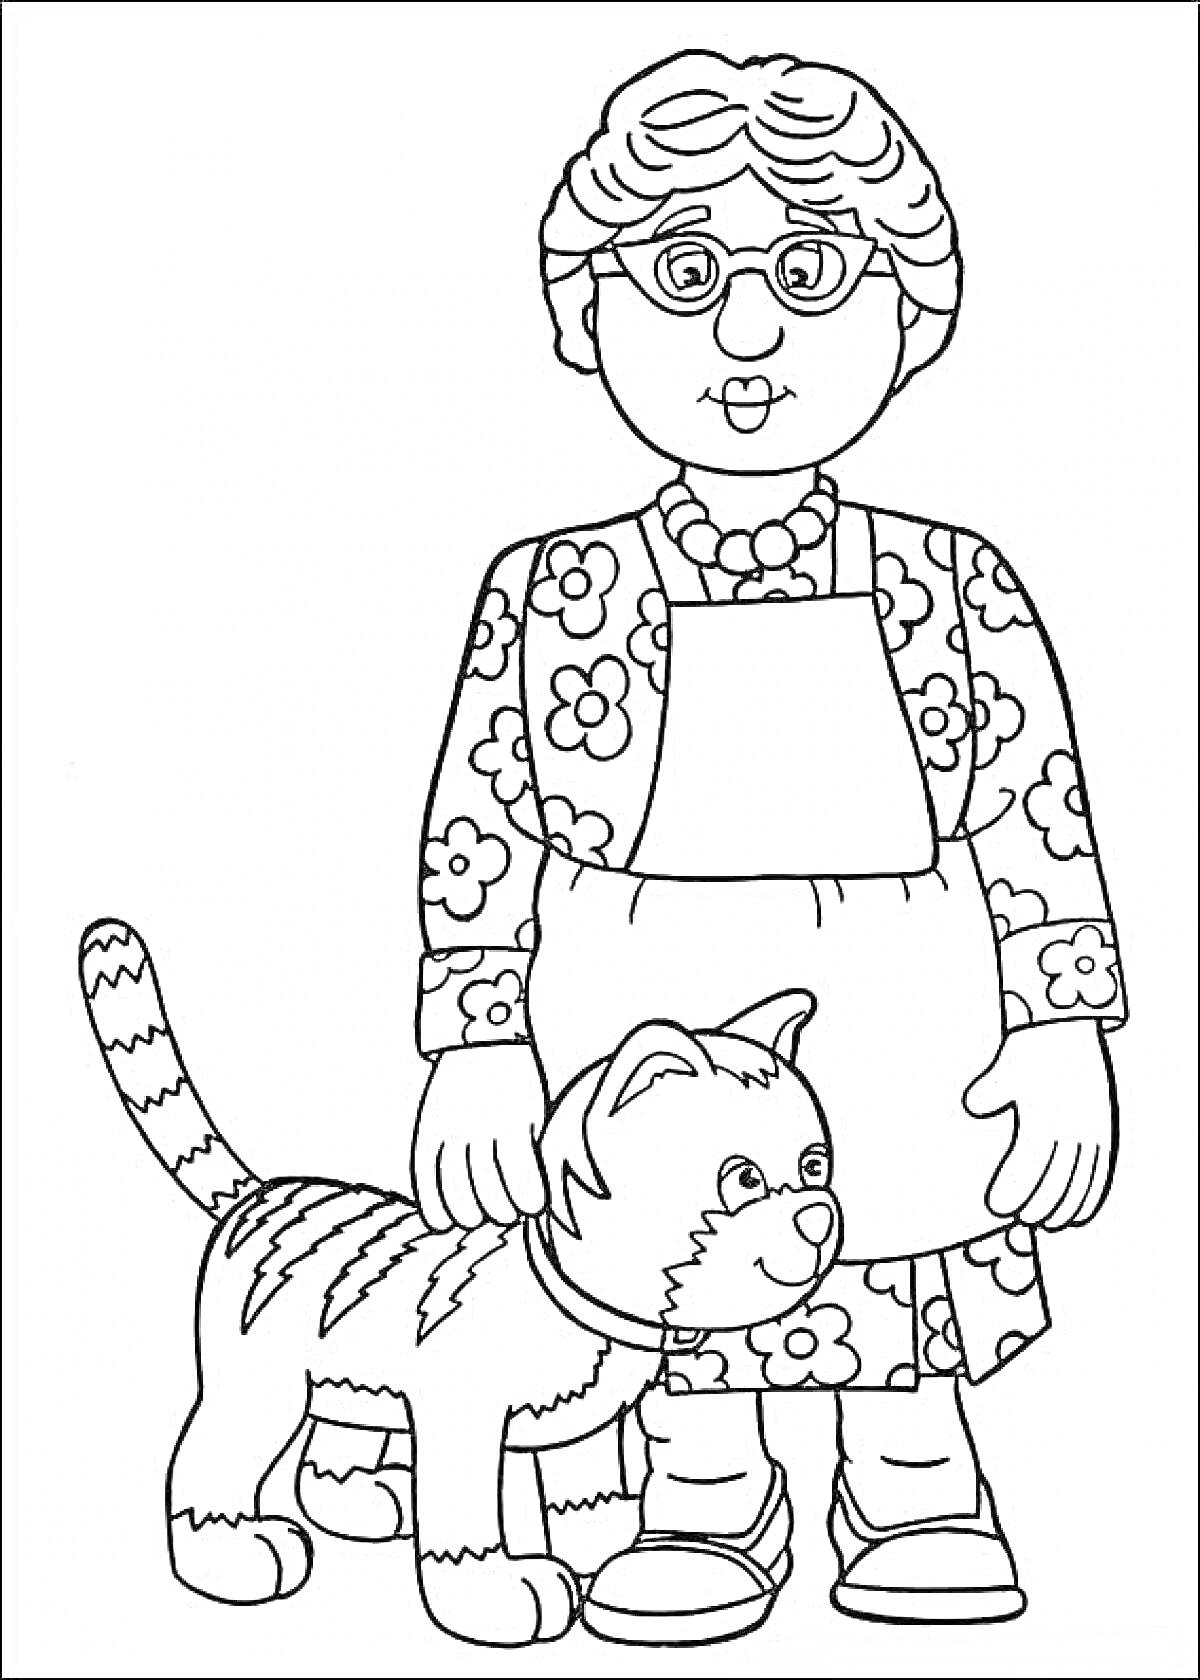 Раскраска Бабушка с котом